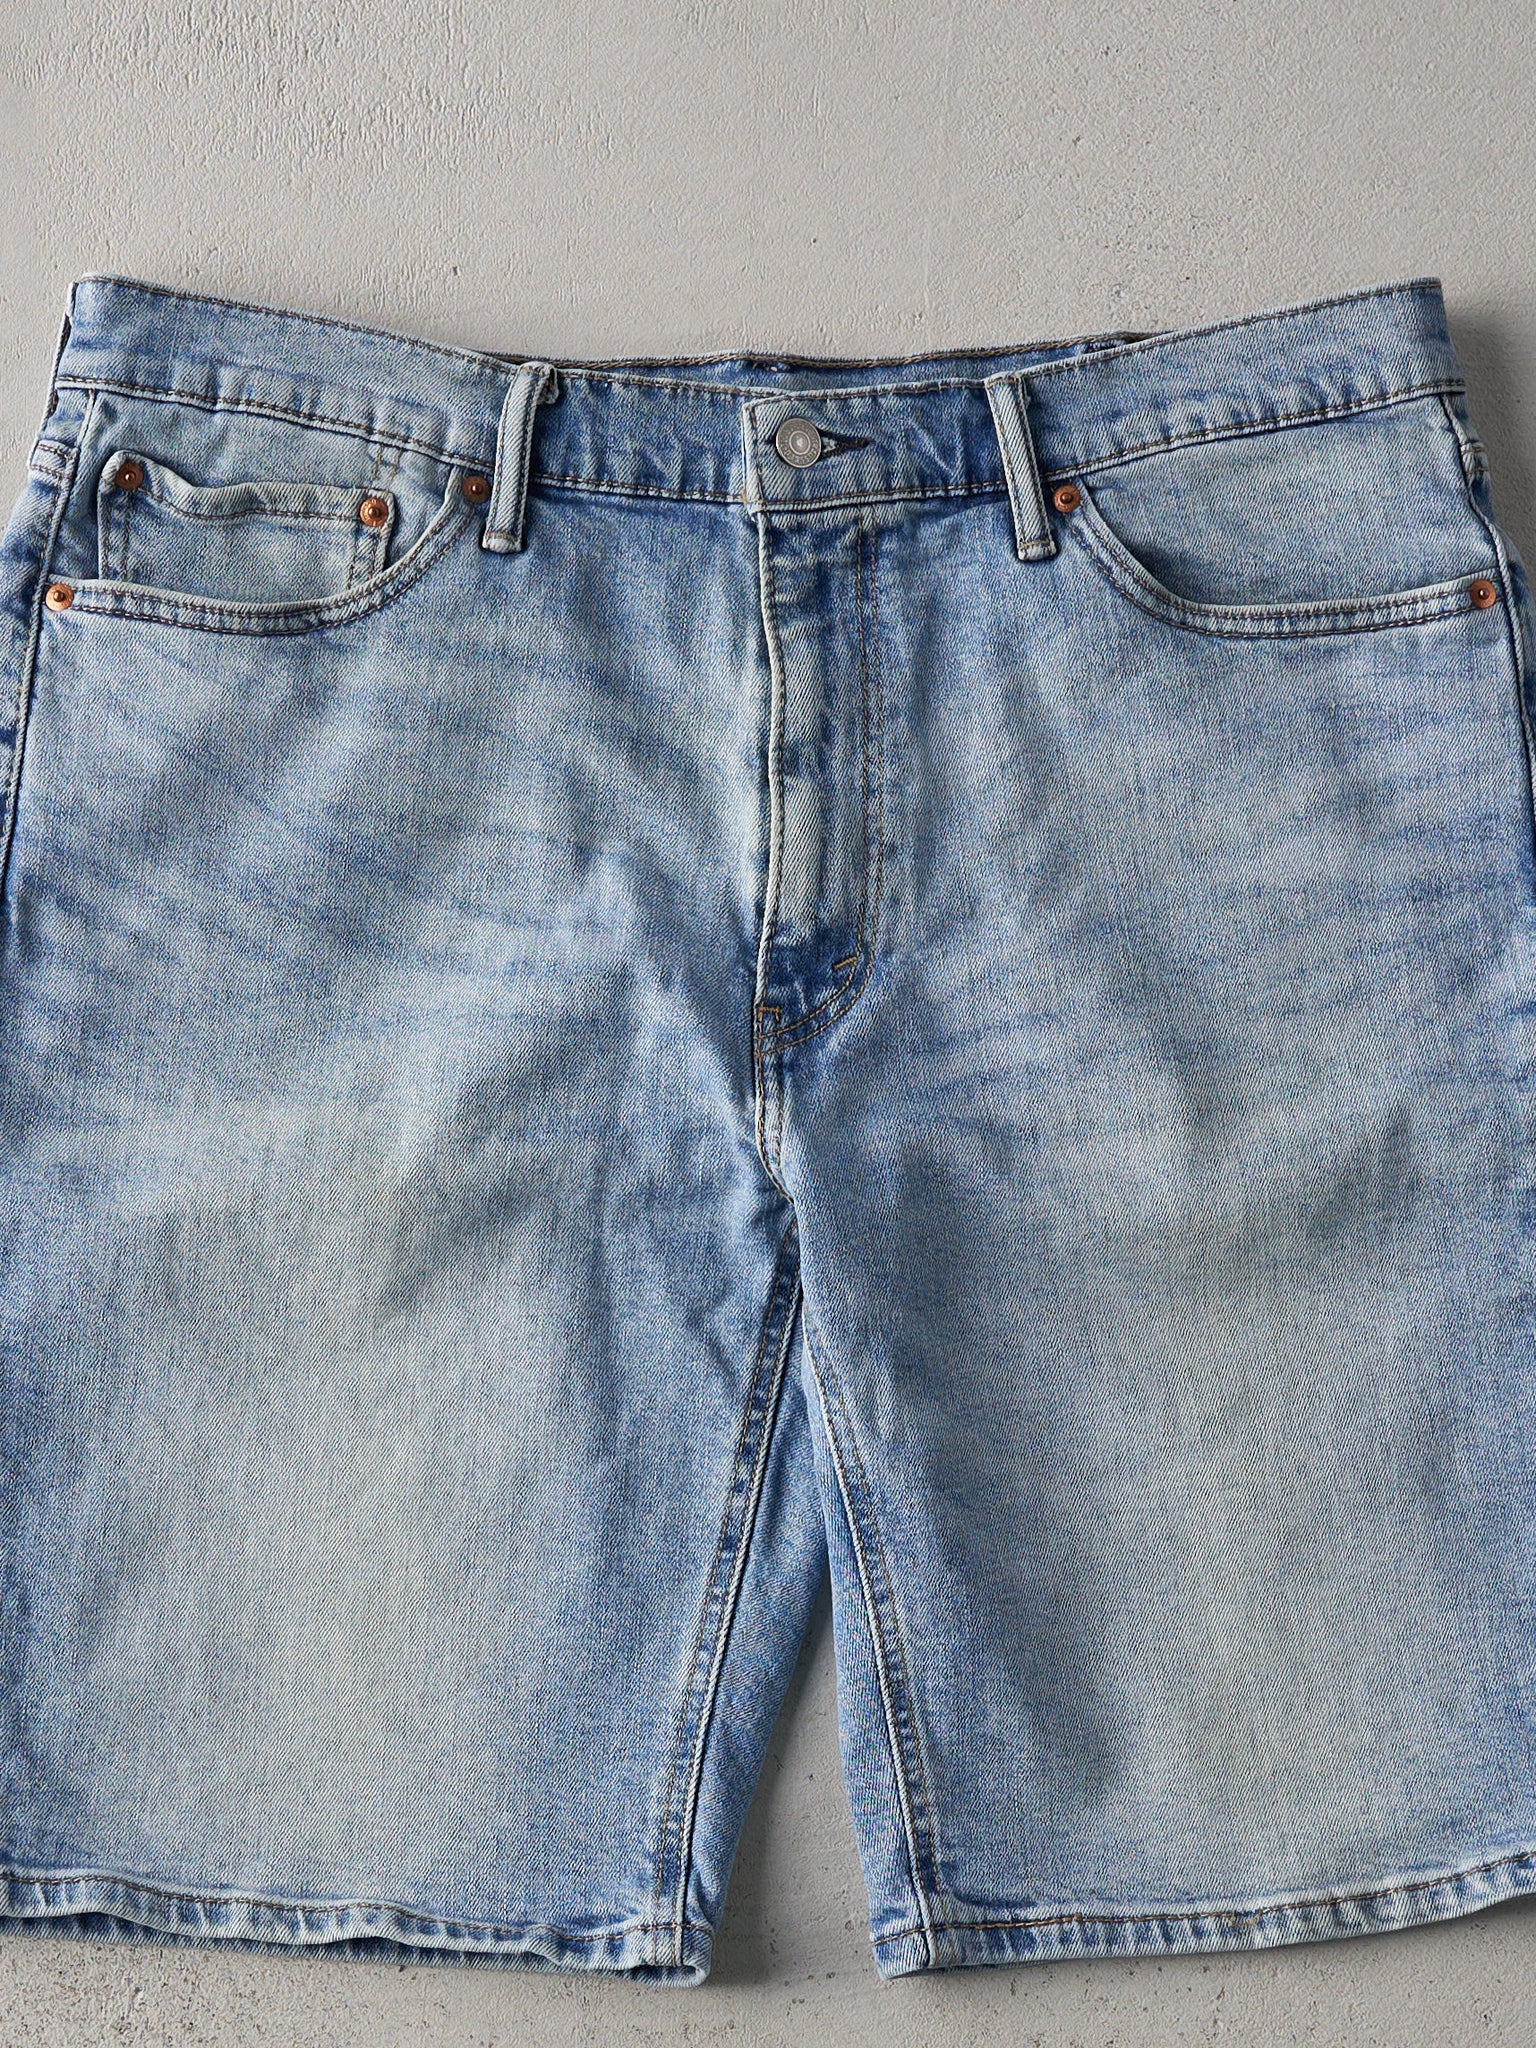 Vintage Light Wash Levi's 541 Jean Shorts (38x10)